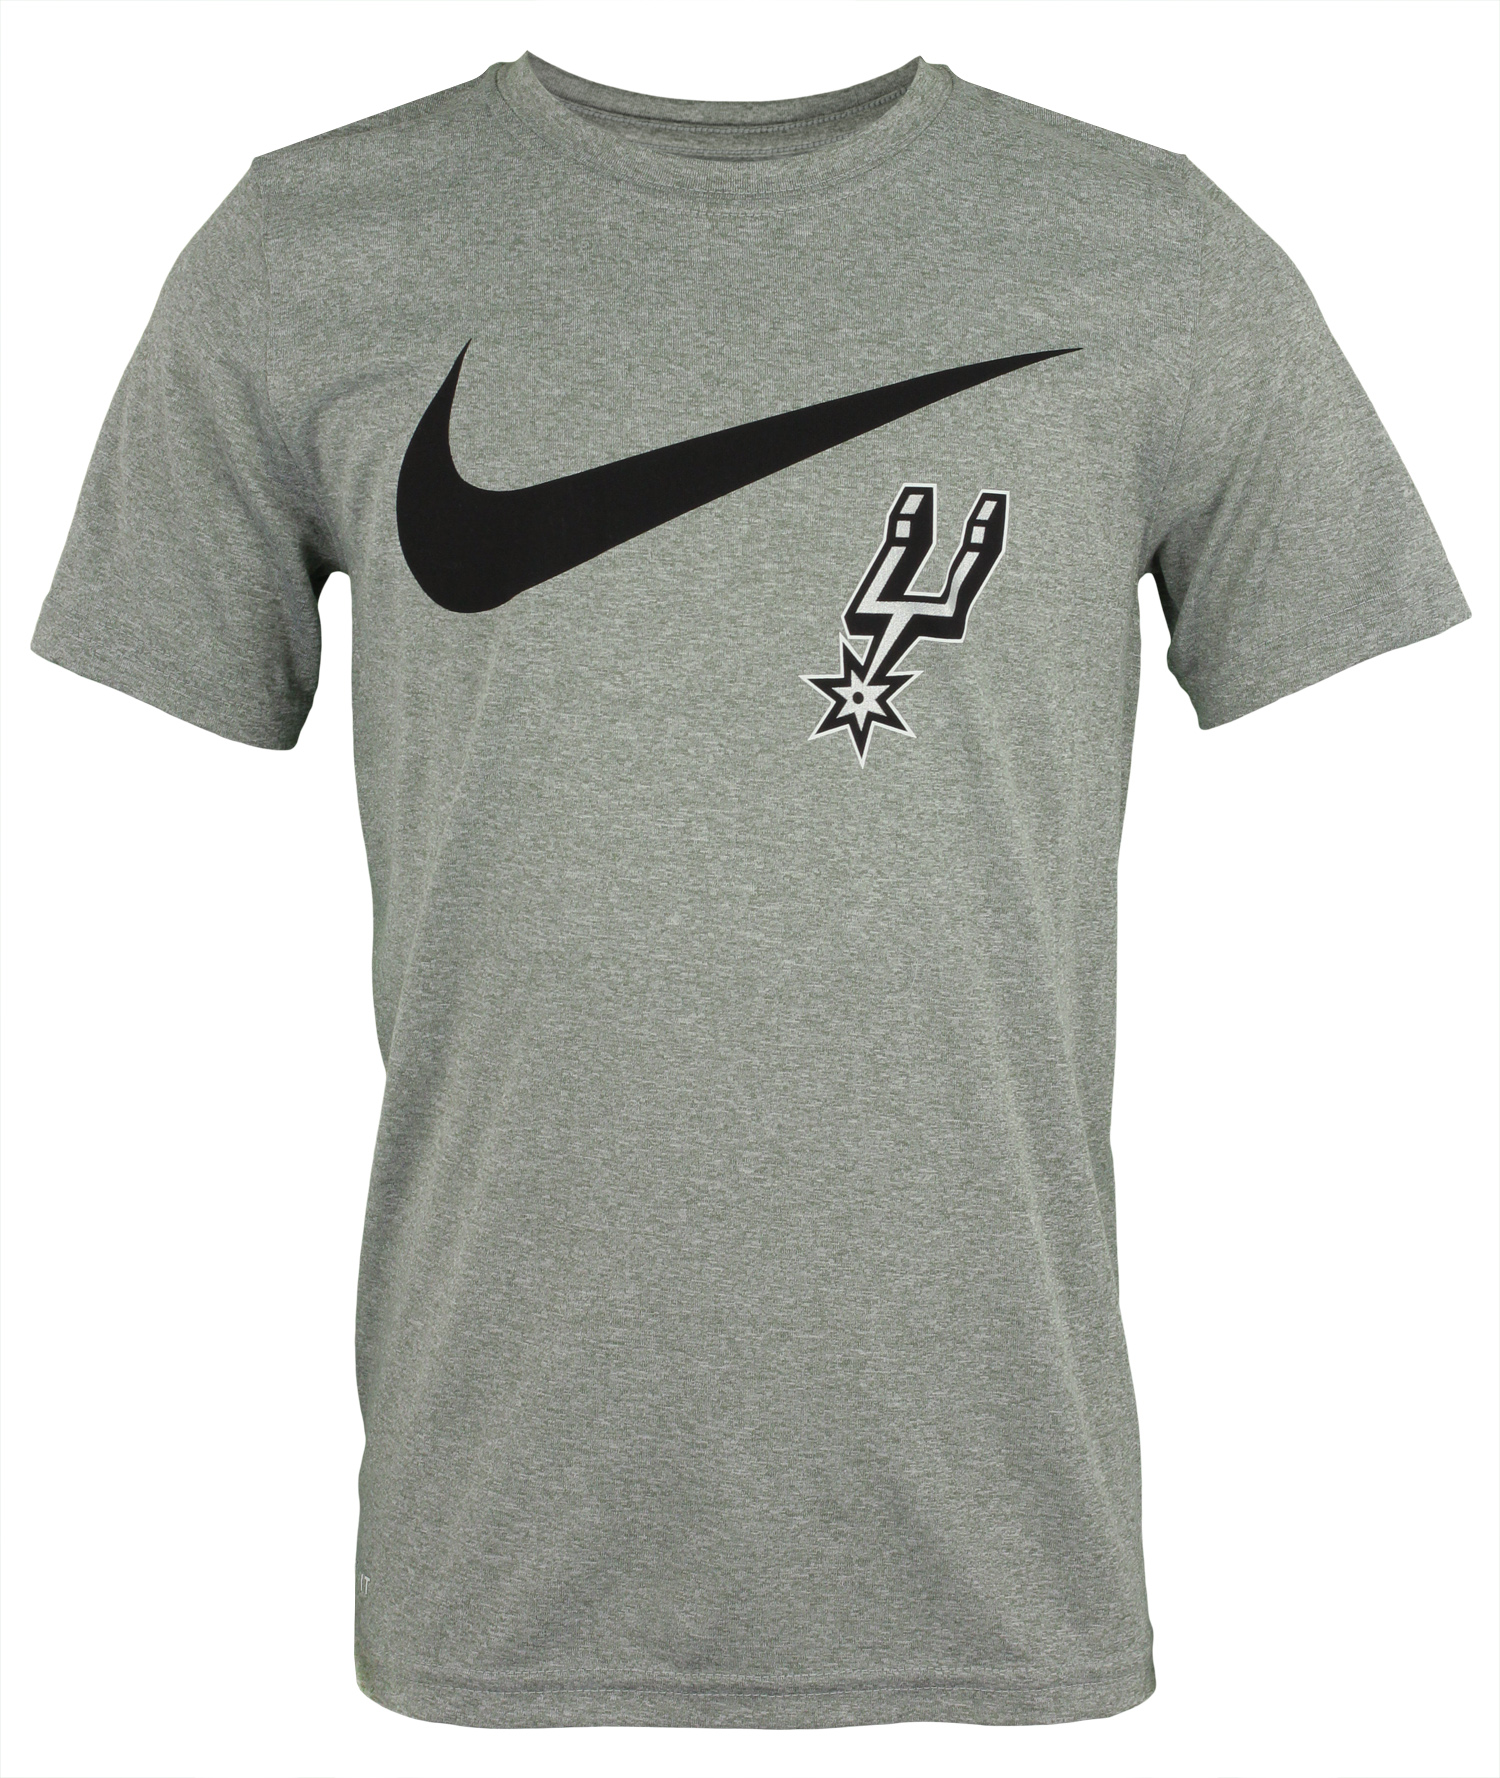 Nike NBA Youth San Antonio Spurs Drift Swoosh Logo Tee Shirt | eBay